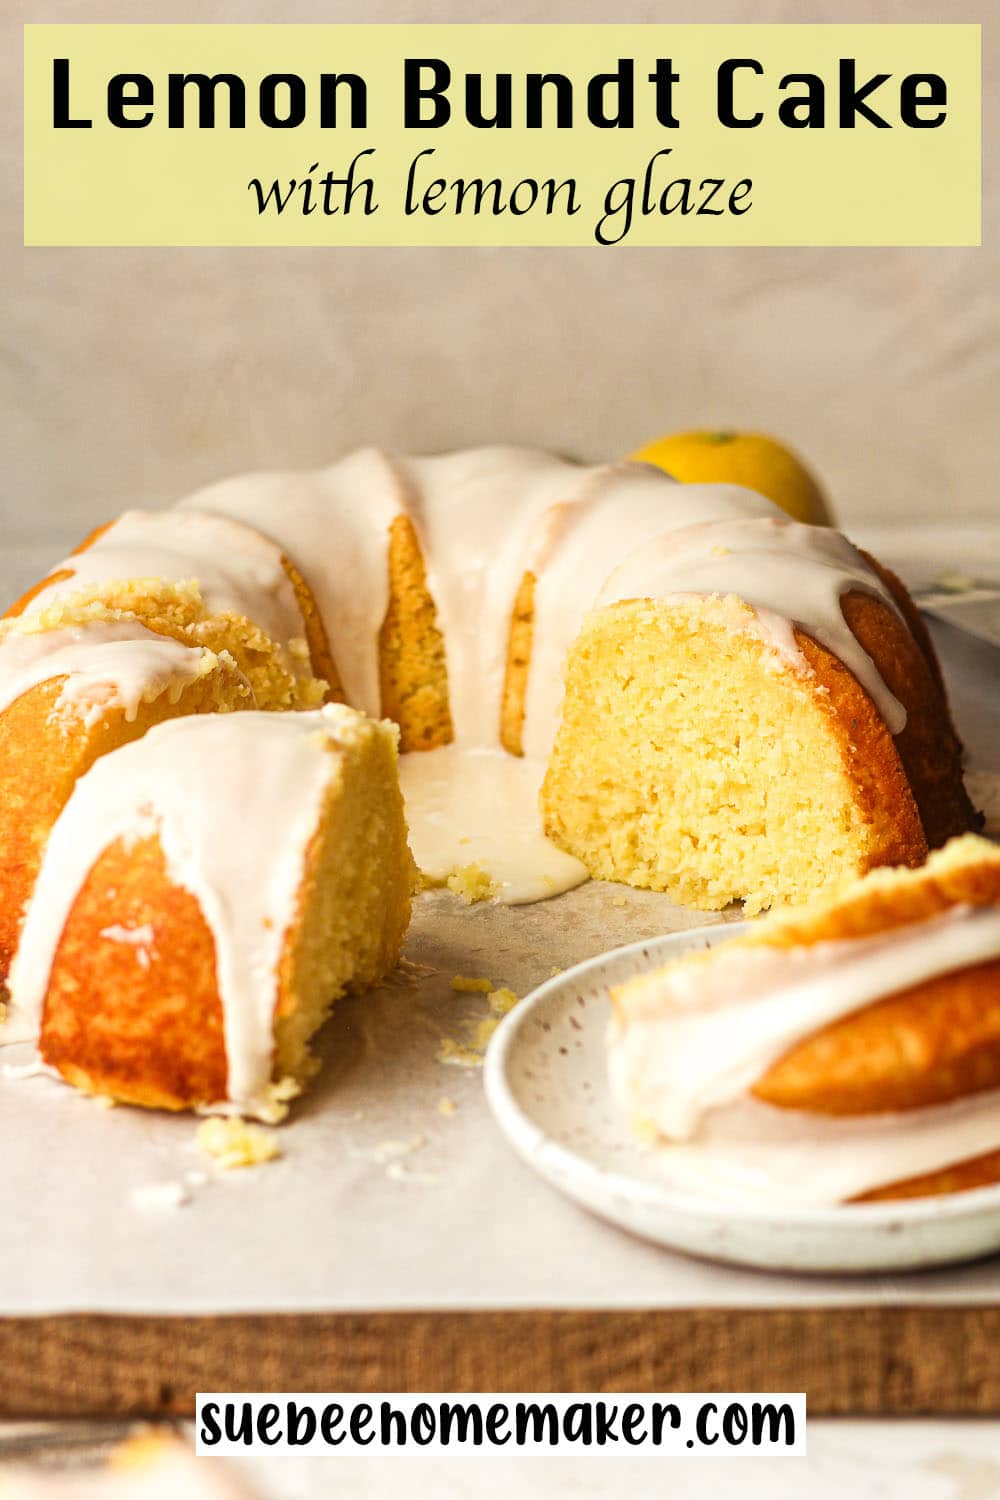 Side view of a sliced lemon bundt cake with lemon glaze.